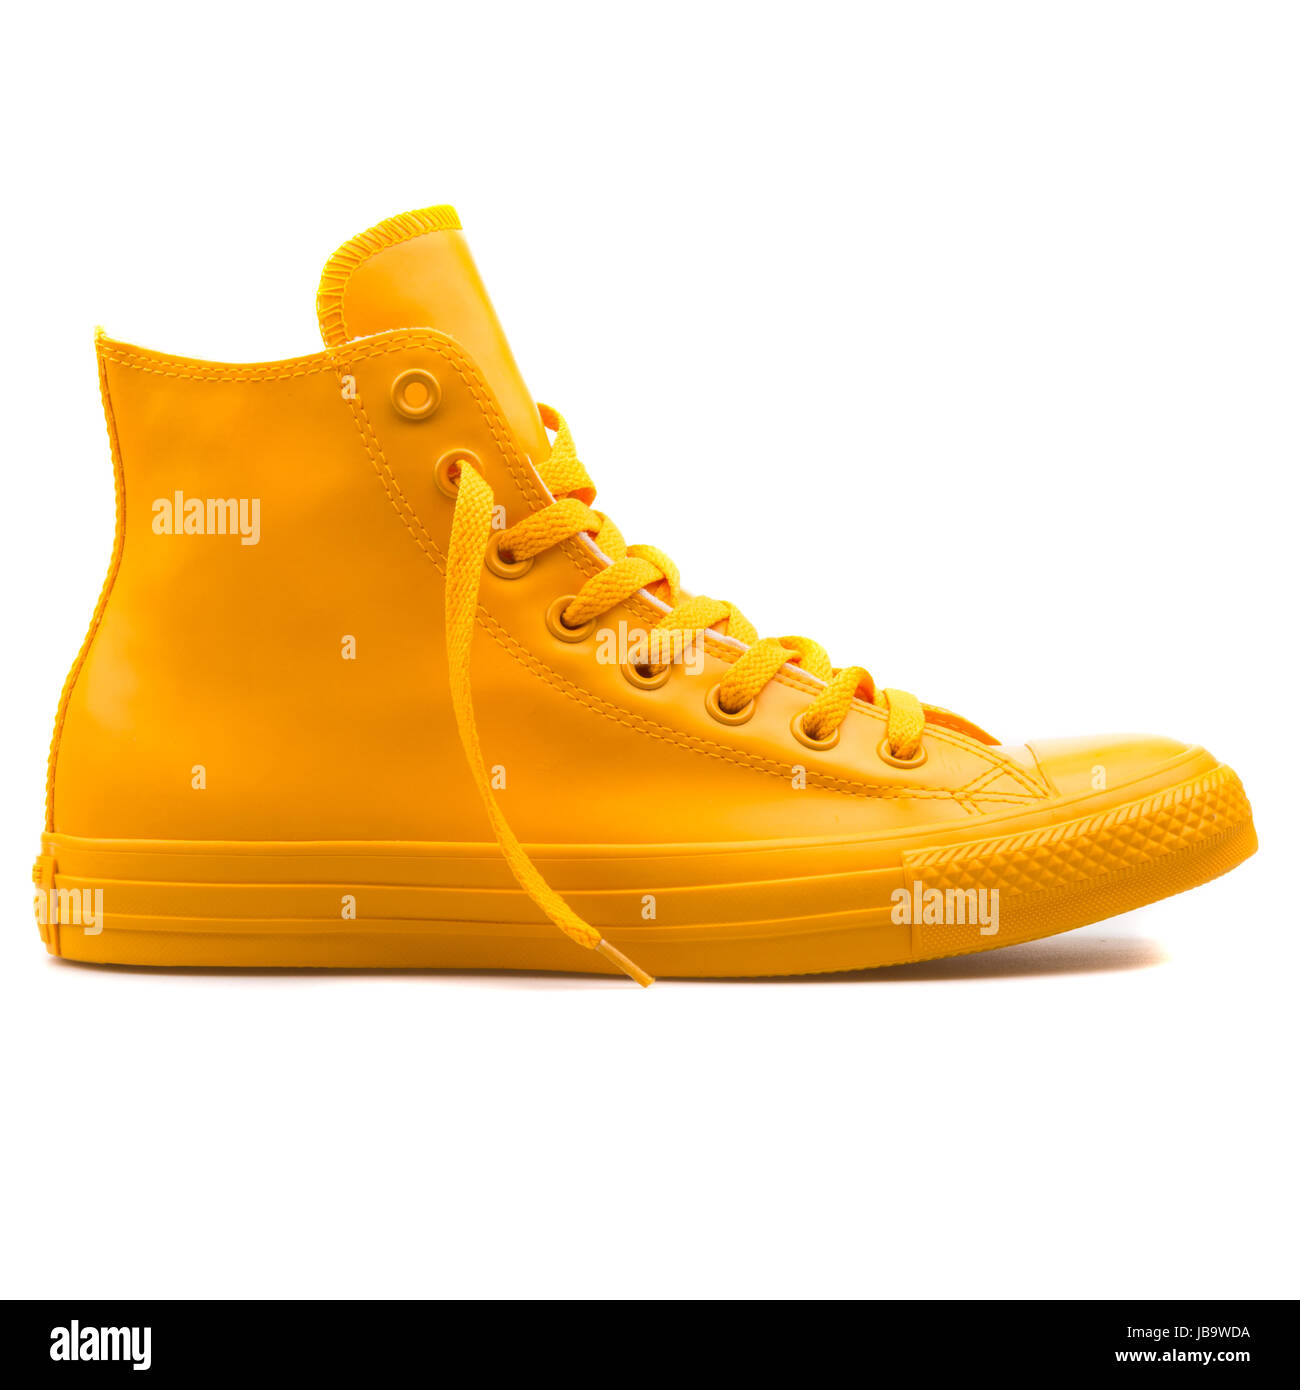 Converse Chuck Taylor All Star Hi Wild Honey Yellow Unisex Shoes - 144747C  Stock Photo - Alamy